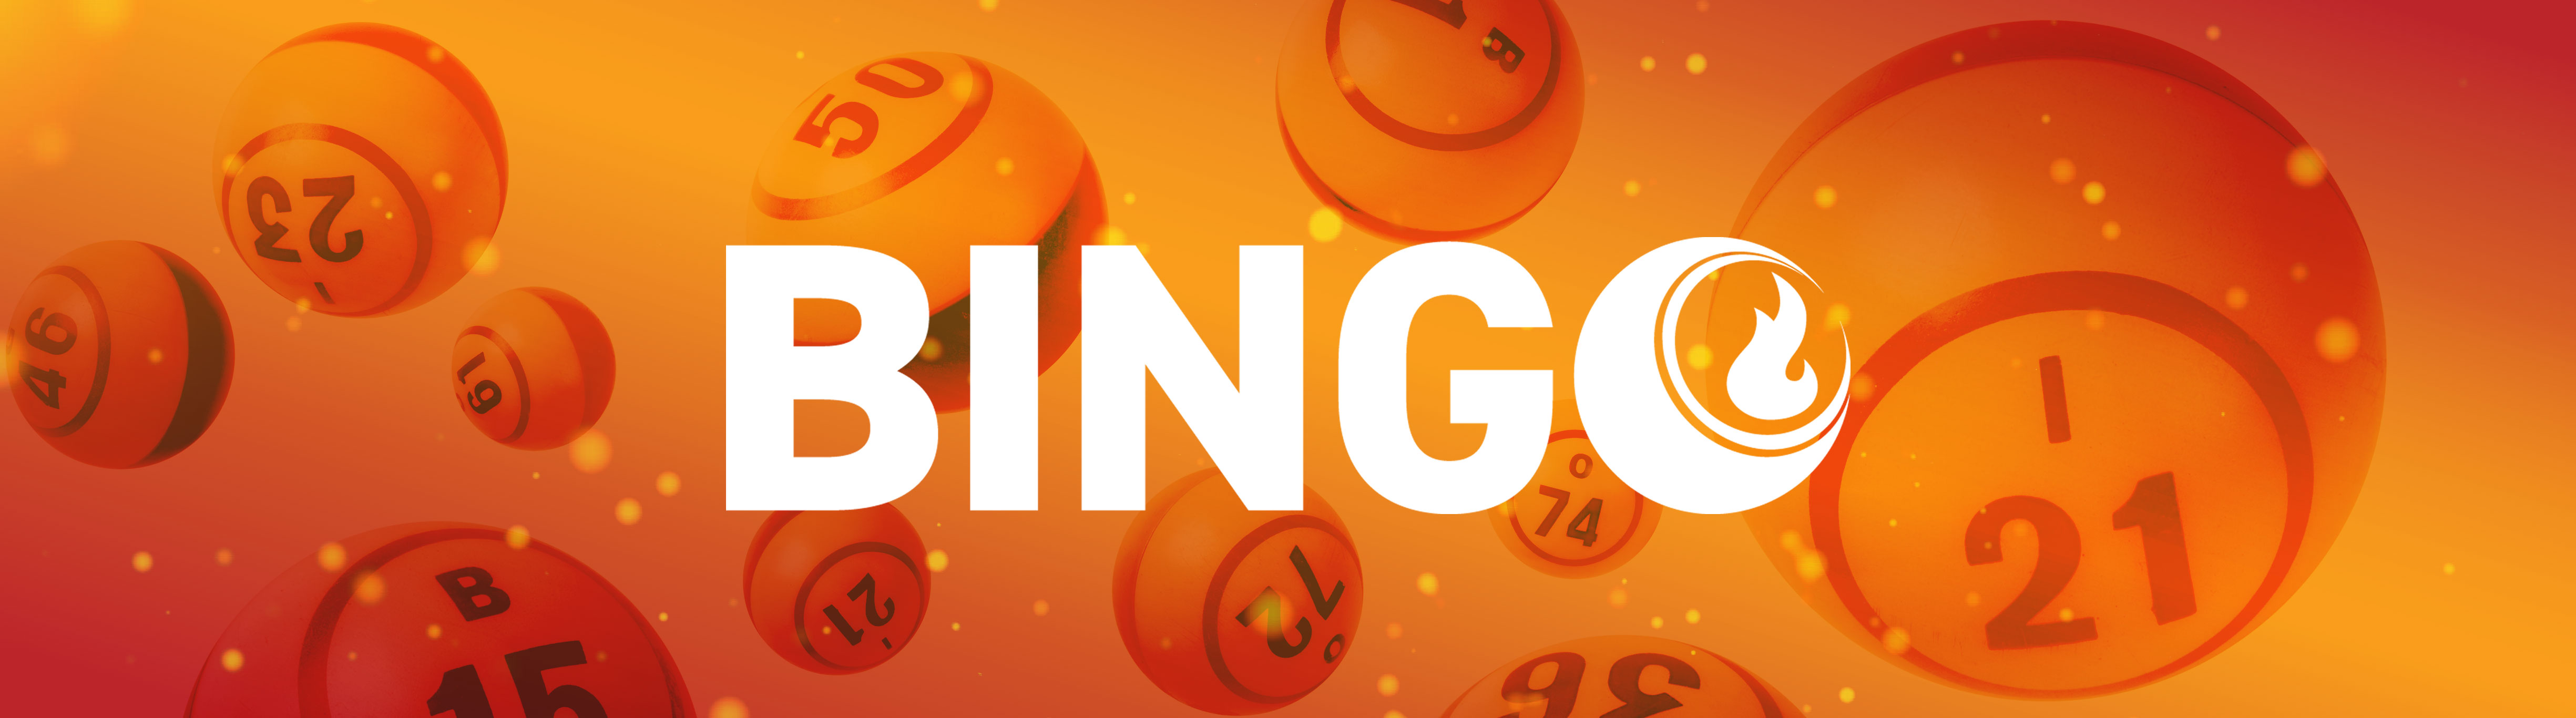 is bingo open at potawatomi casino